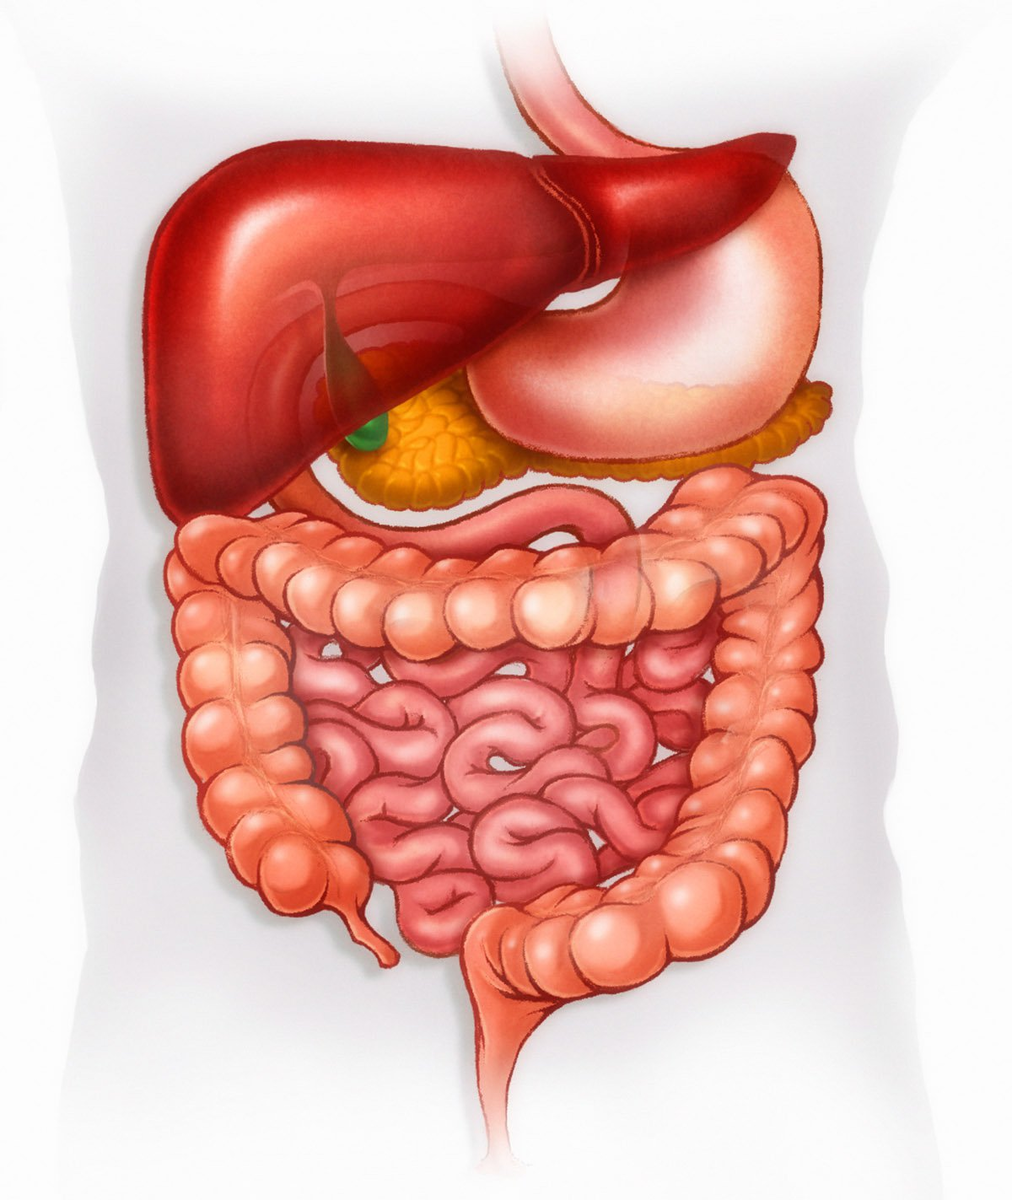 Желудок кишечник и пищеварительные железы